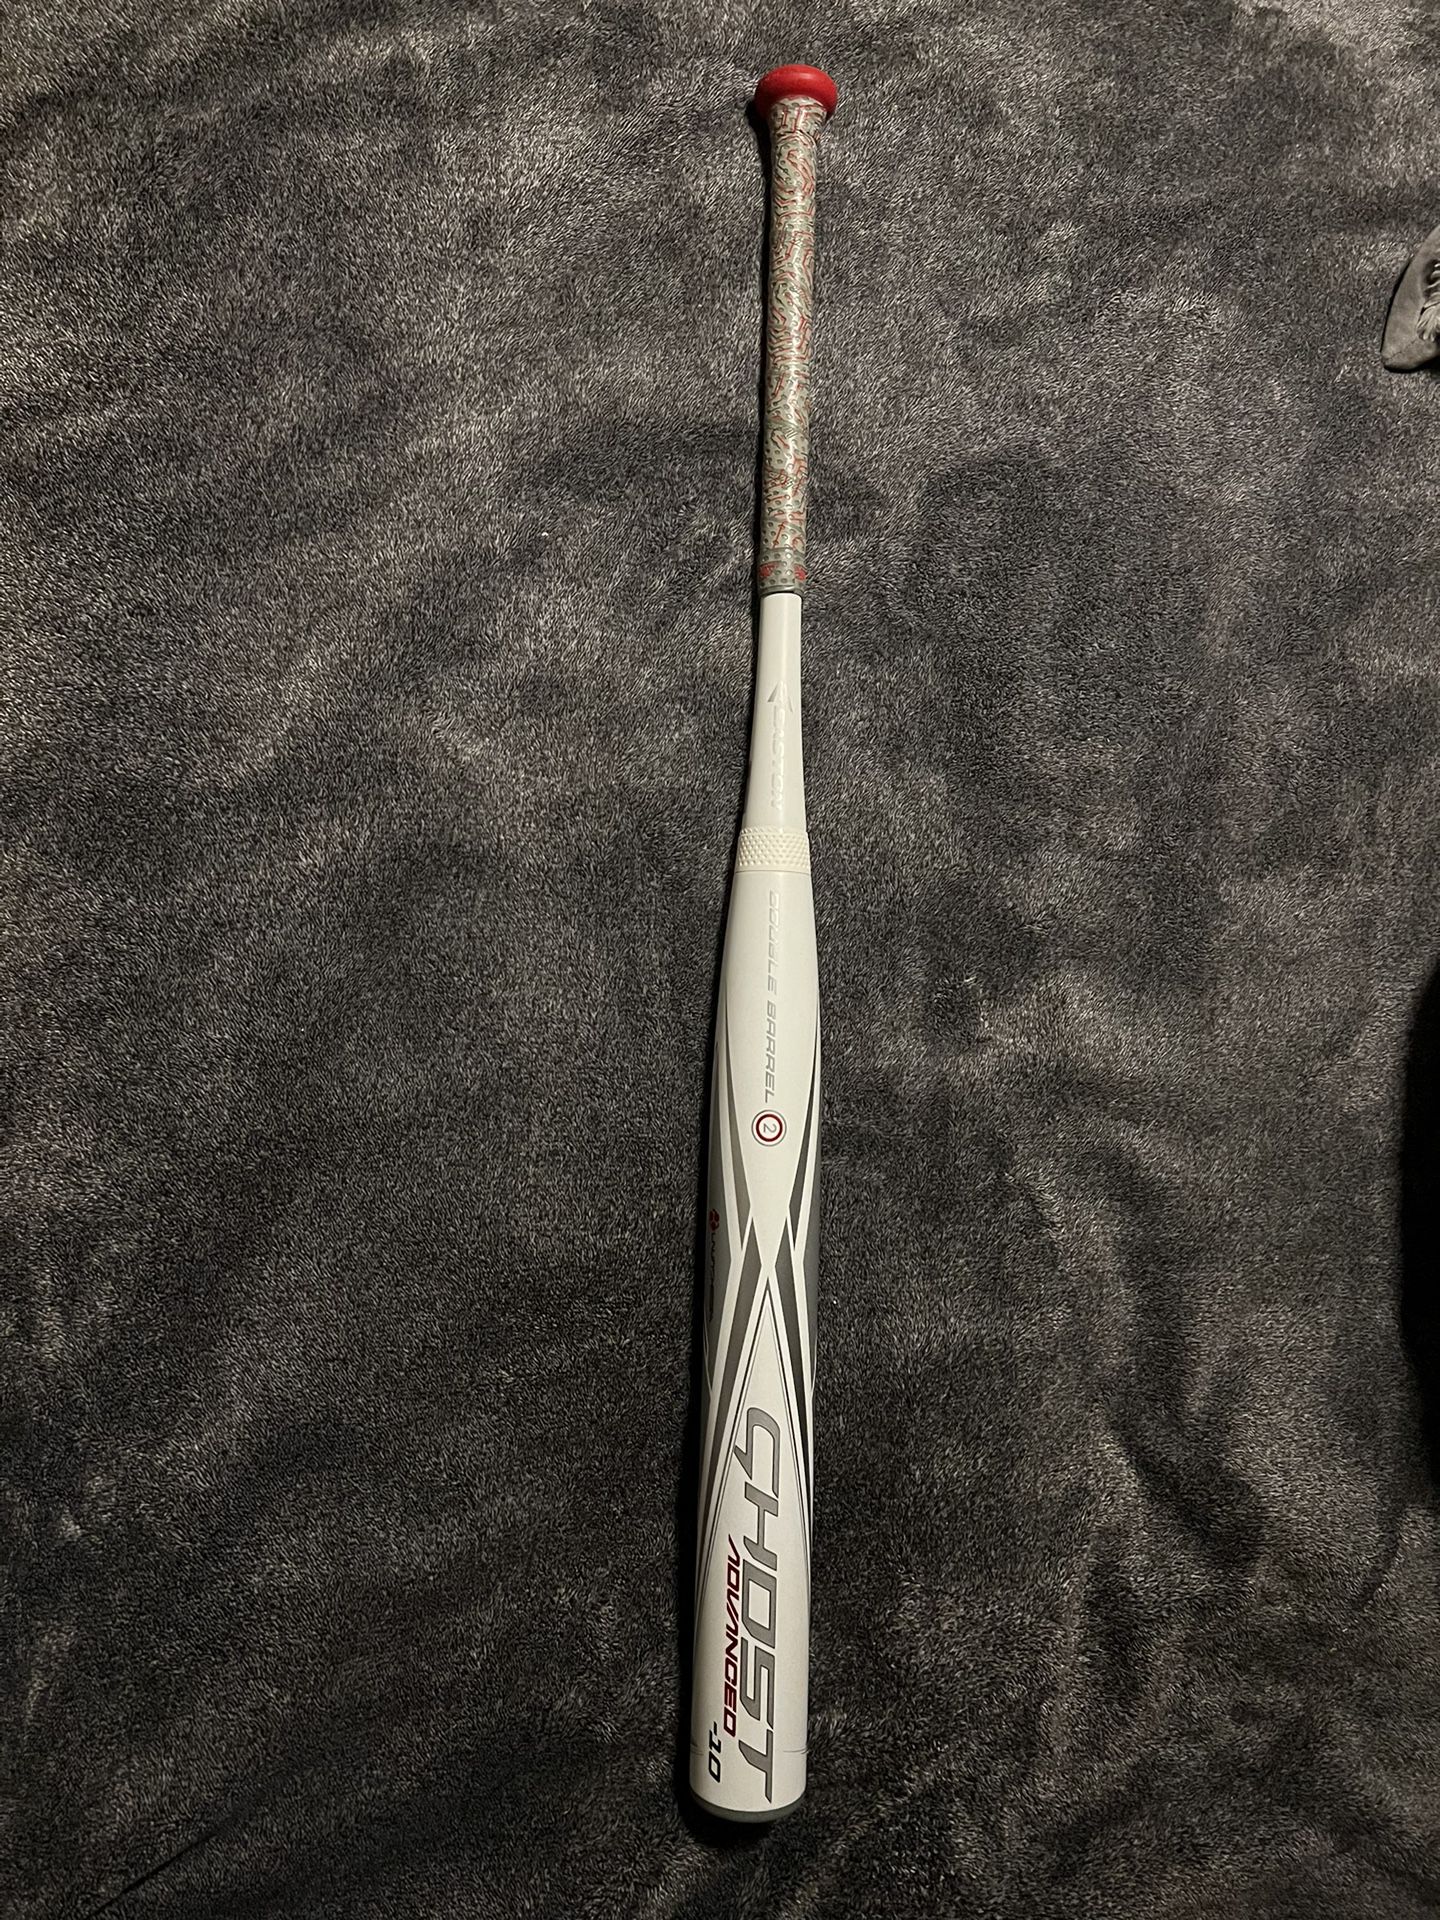 ghost softball bat 